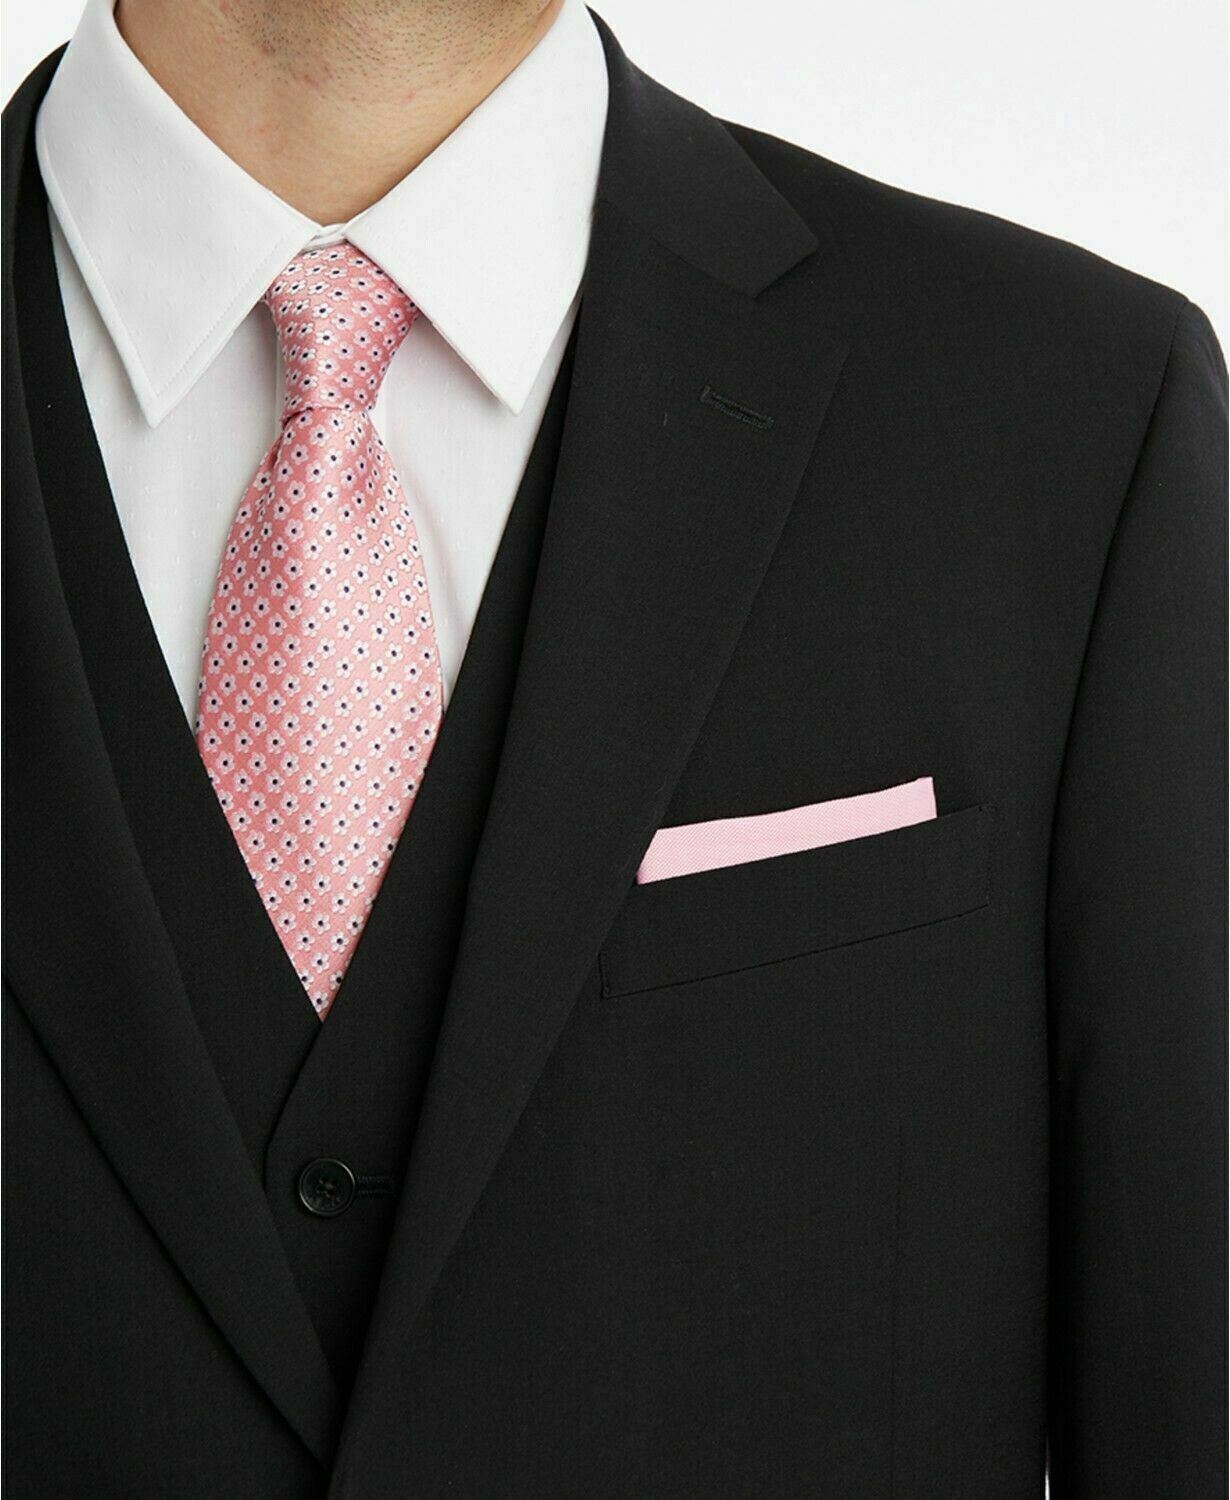 Tommy Hilfiger Men's Suit Jacket 38S Black Modern-Fit TH Flex Stretch